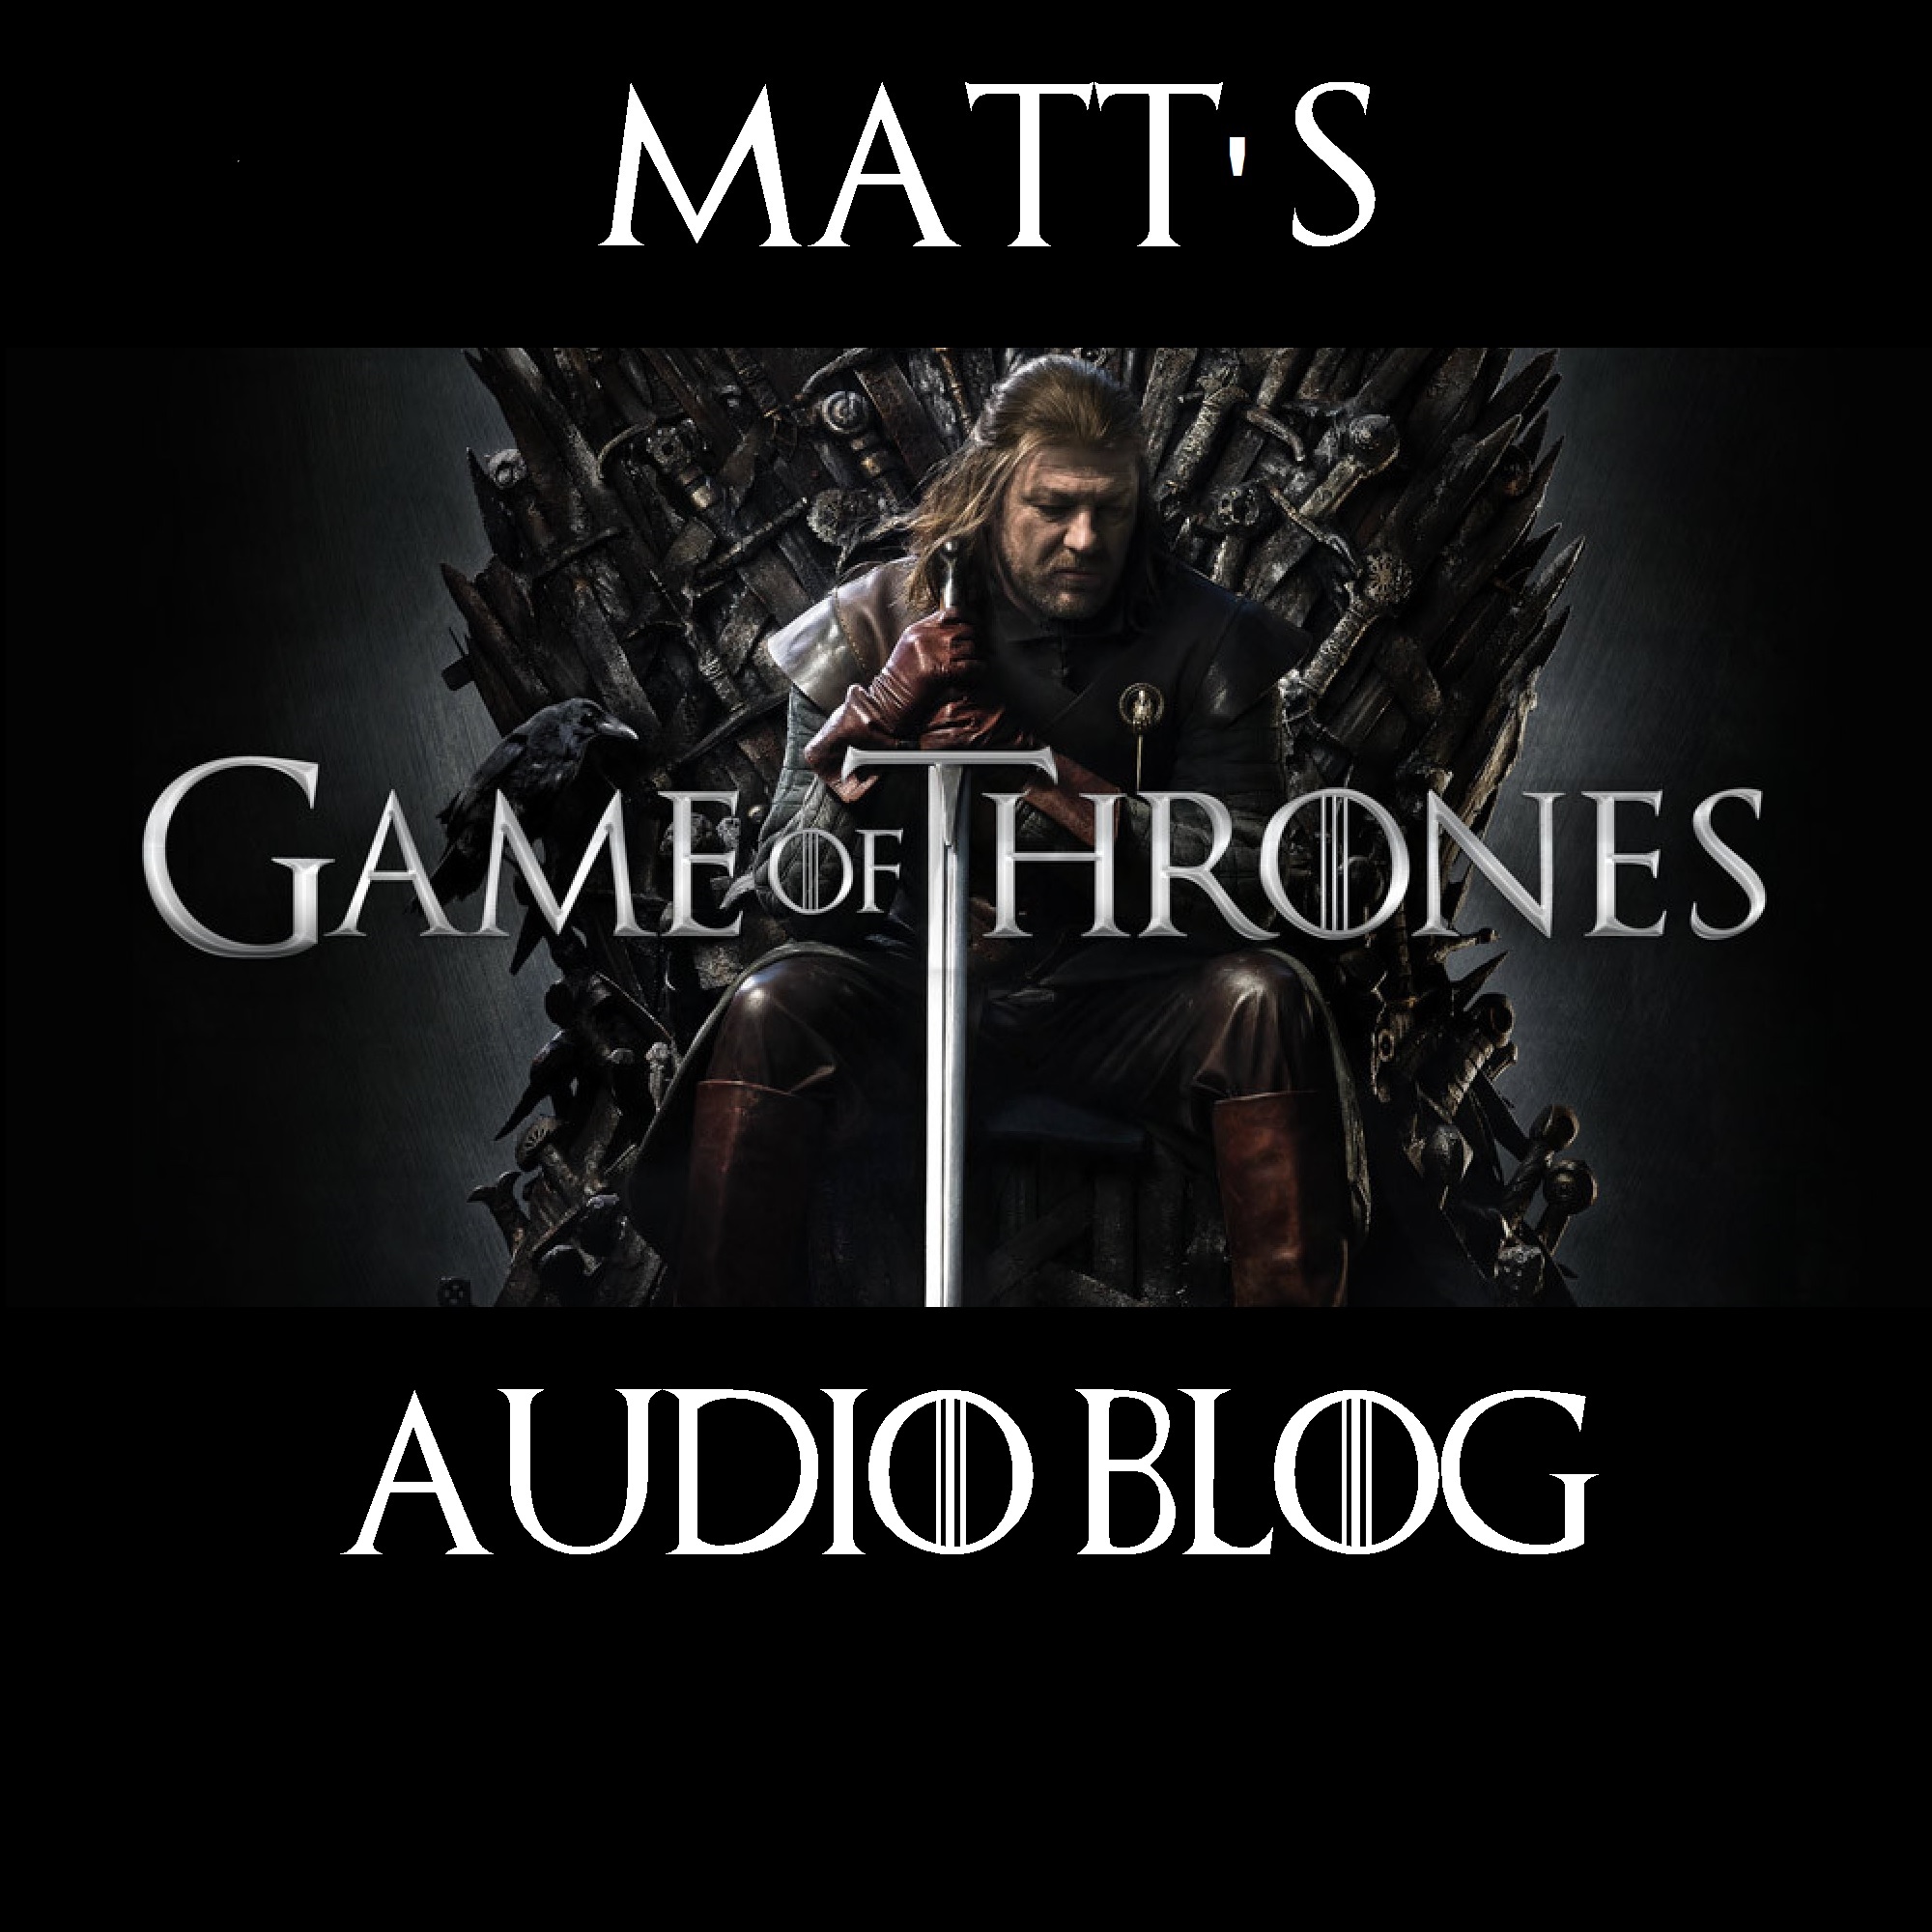 Game of Thrones: Matt's Blog